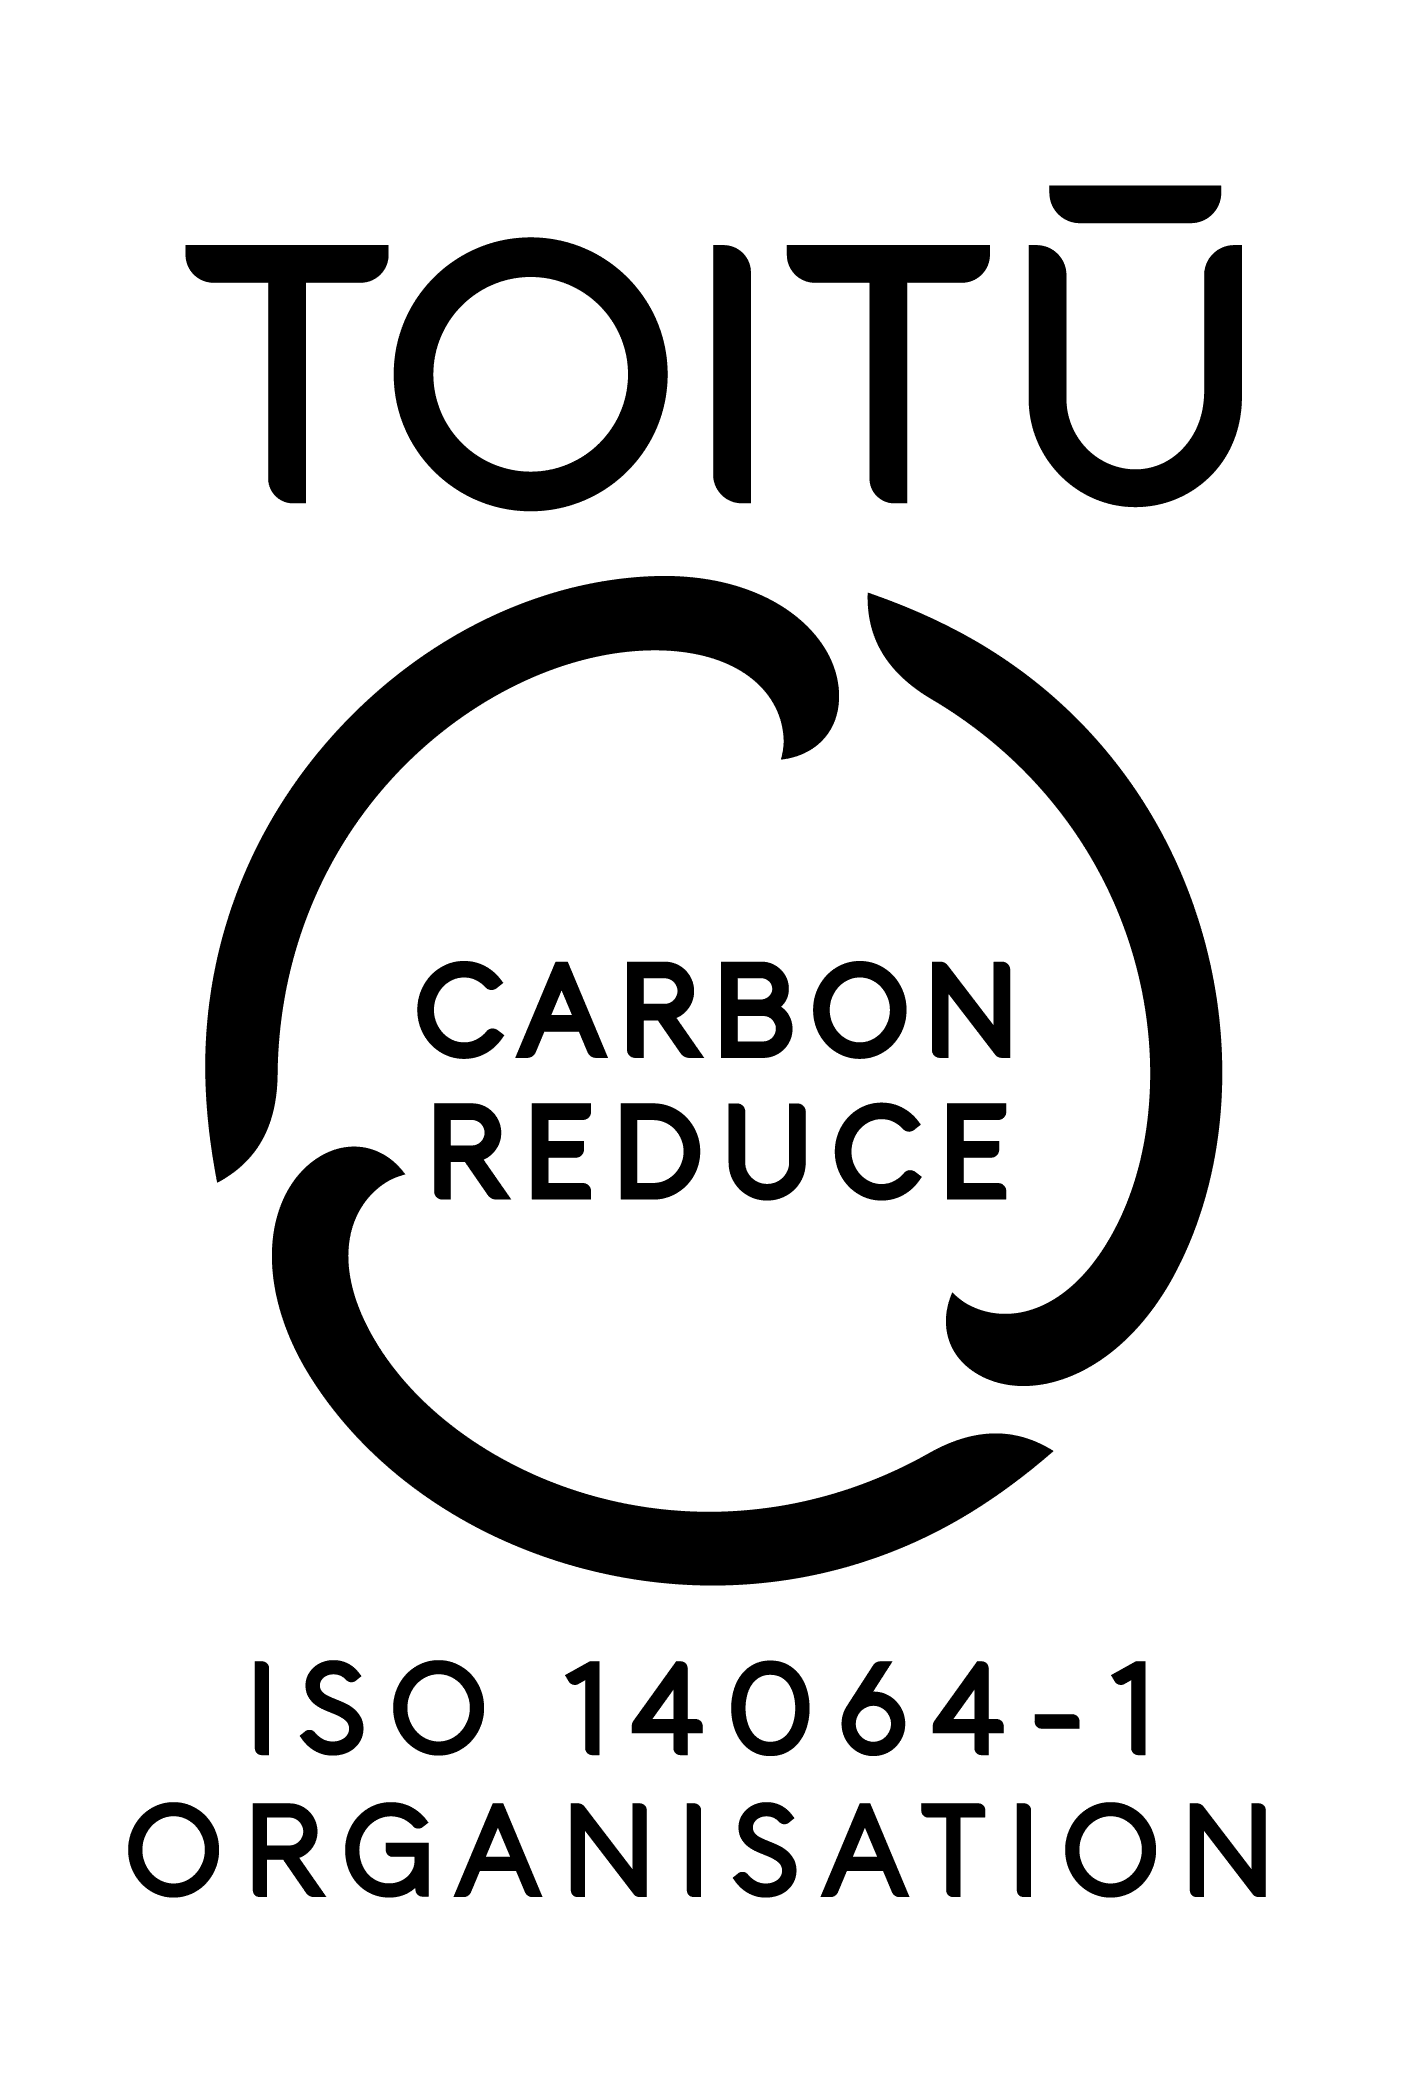 Toitū_carbon reduce_ISO14064-1 organisation_Black